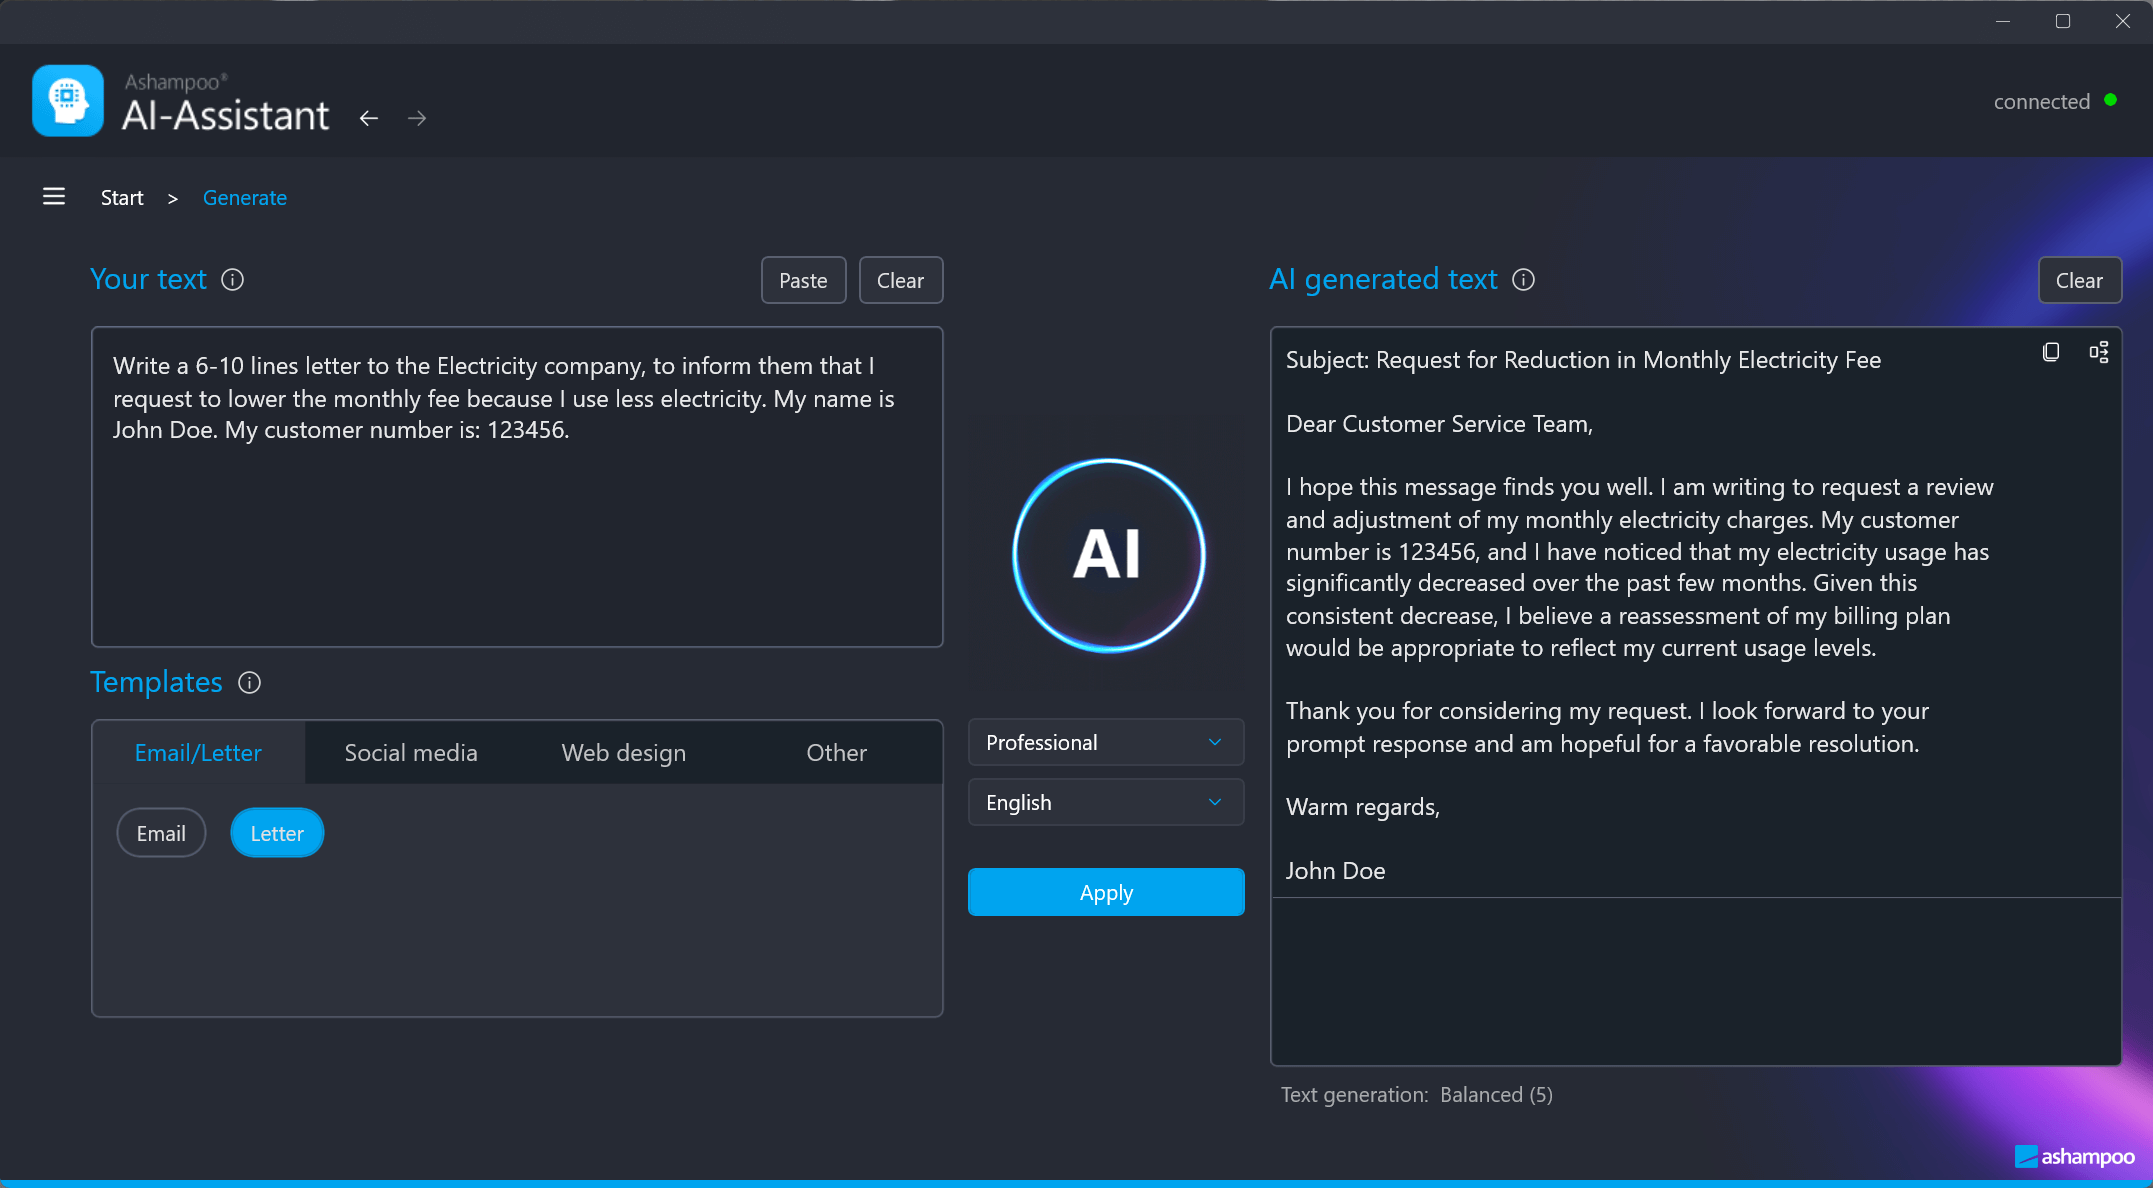 Ashampoo AI Assistant - Generate text